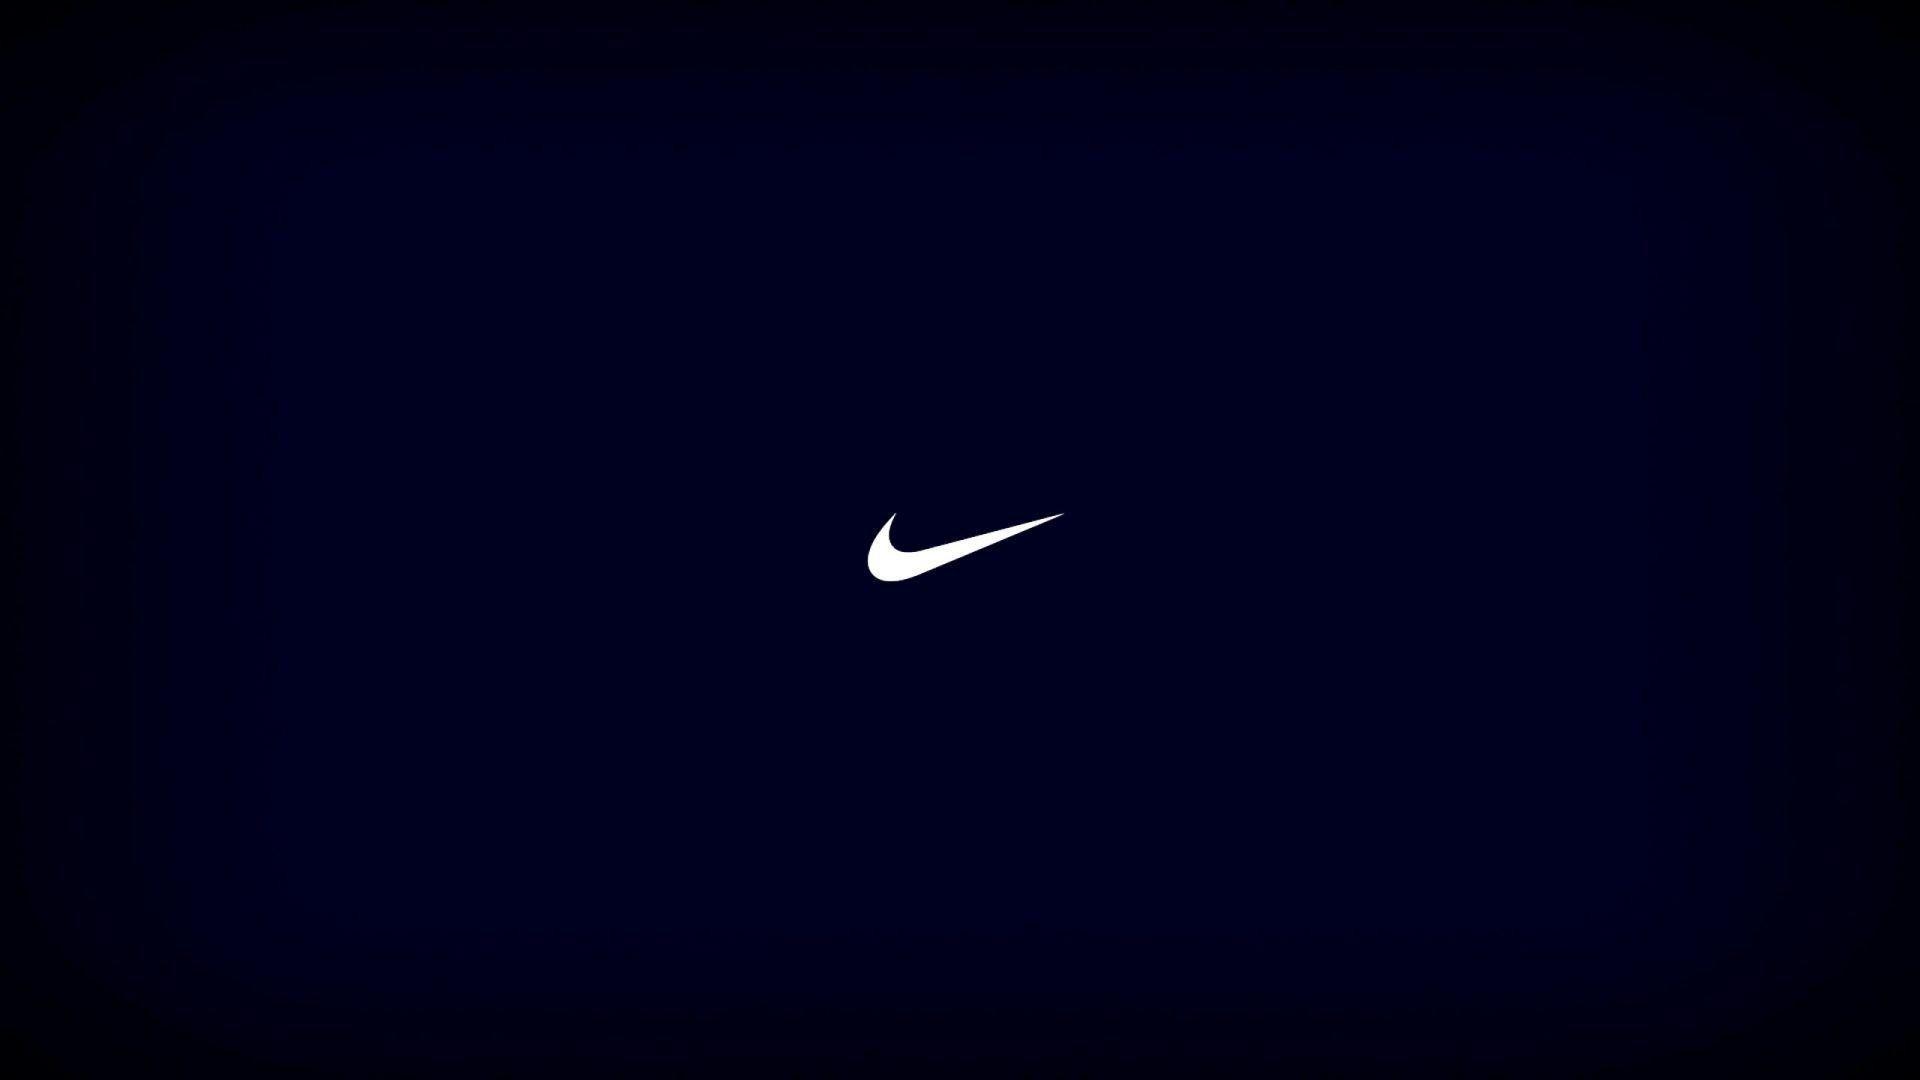 Nike Symbol Wallpapers Top Free Nike Symbol Backgrounds